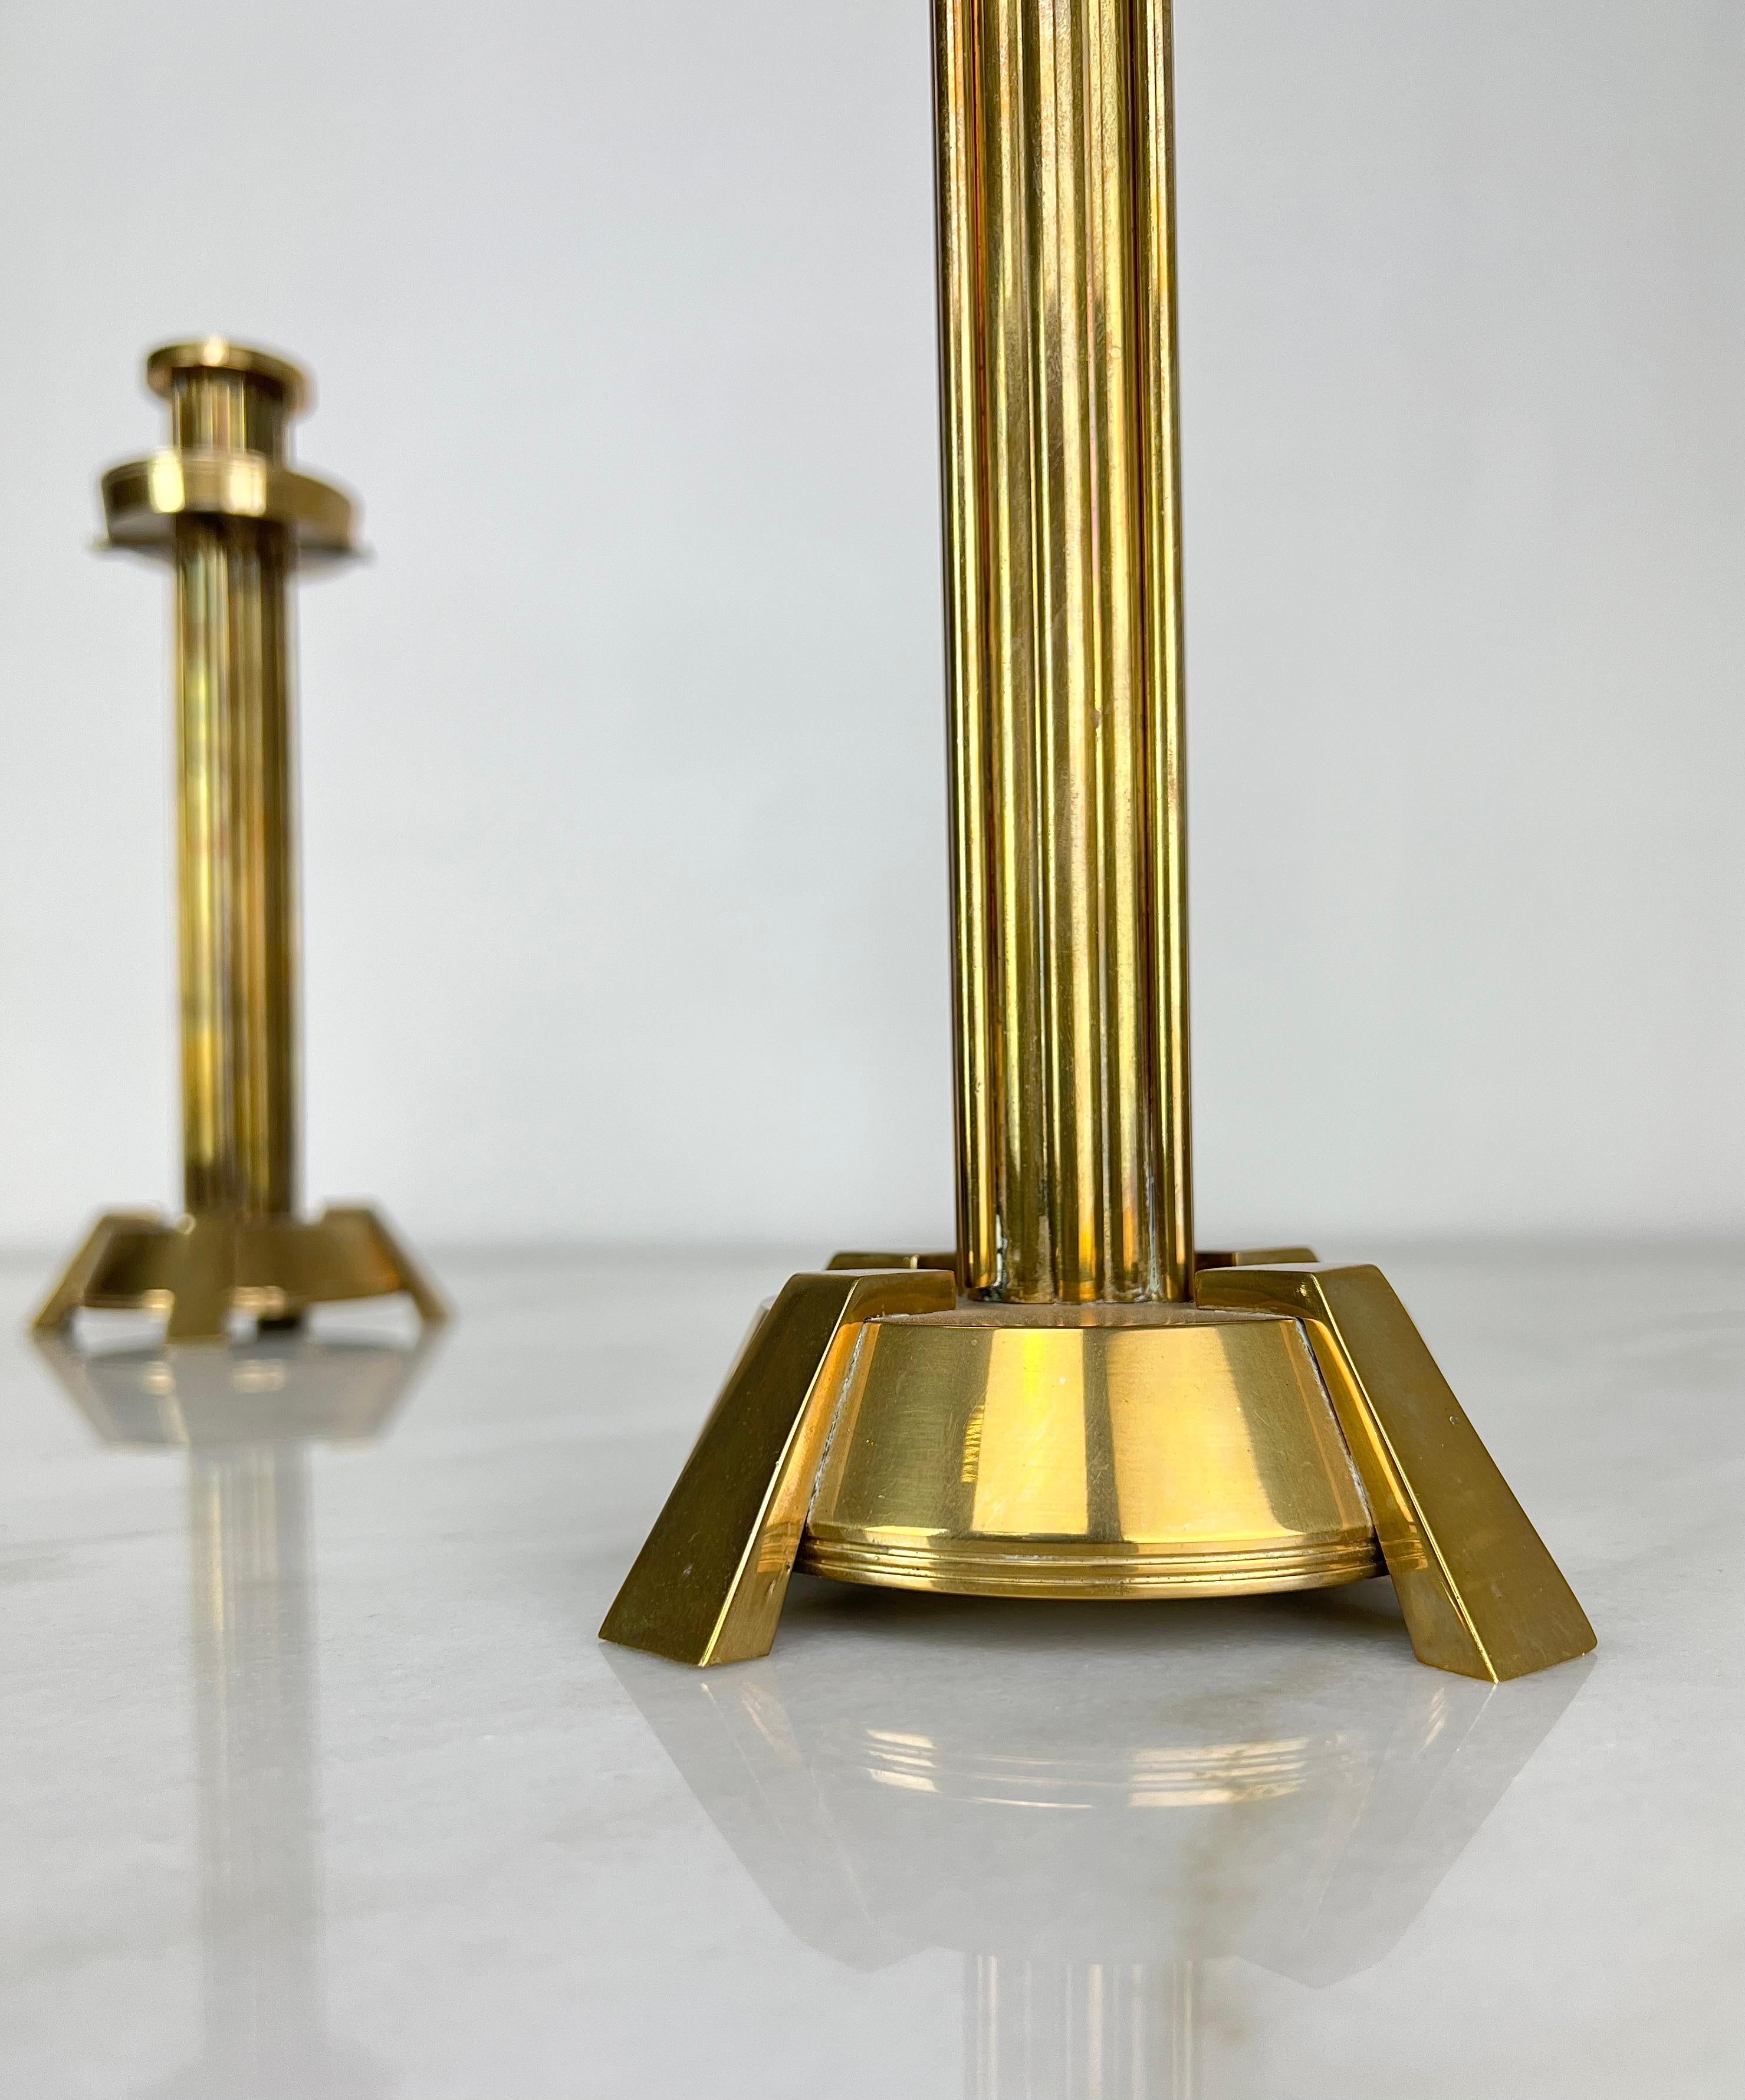 20th Century Brass Candelabras Candle Holders Midcentury Italian Design 1970s Set of 2